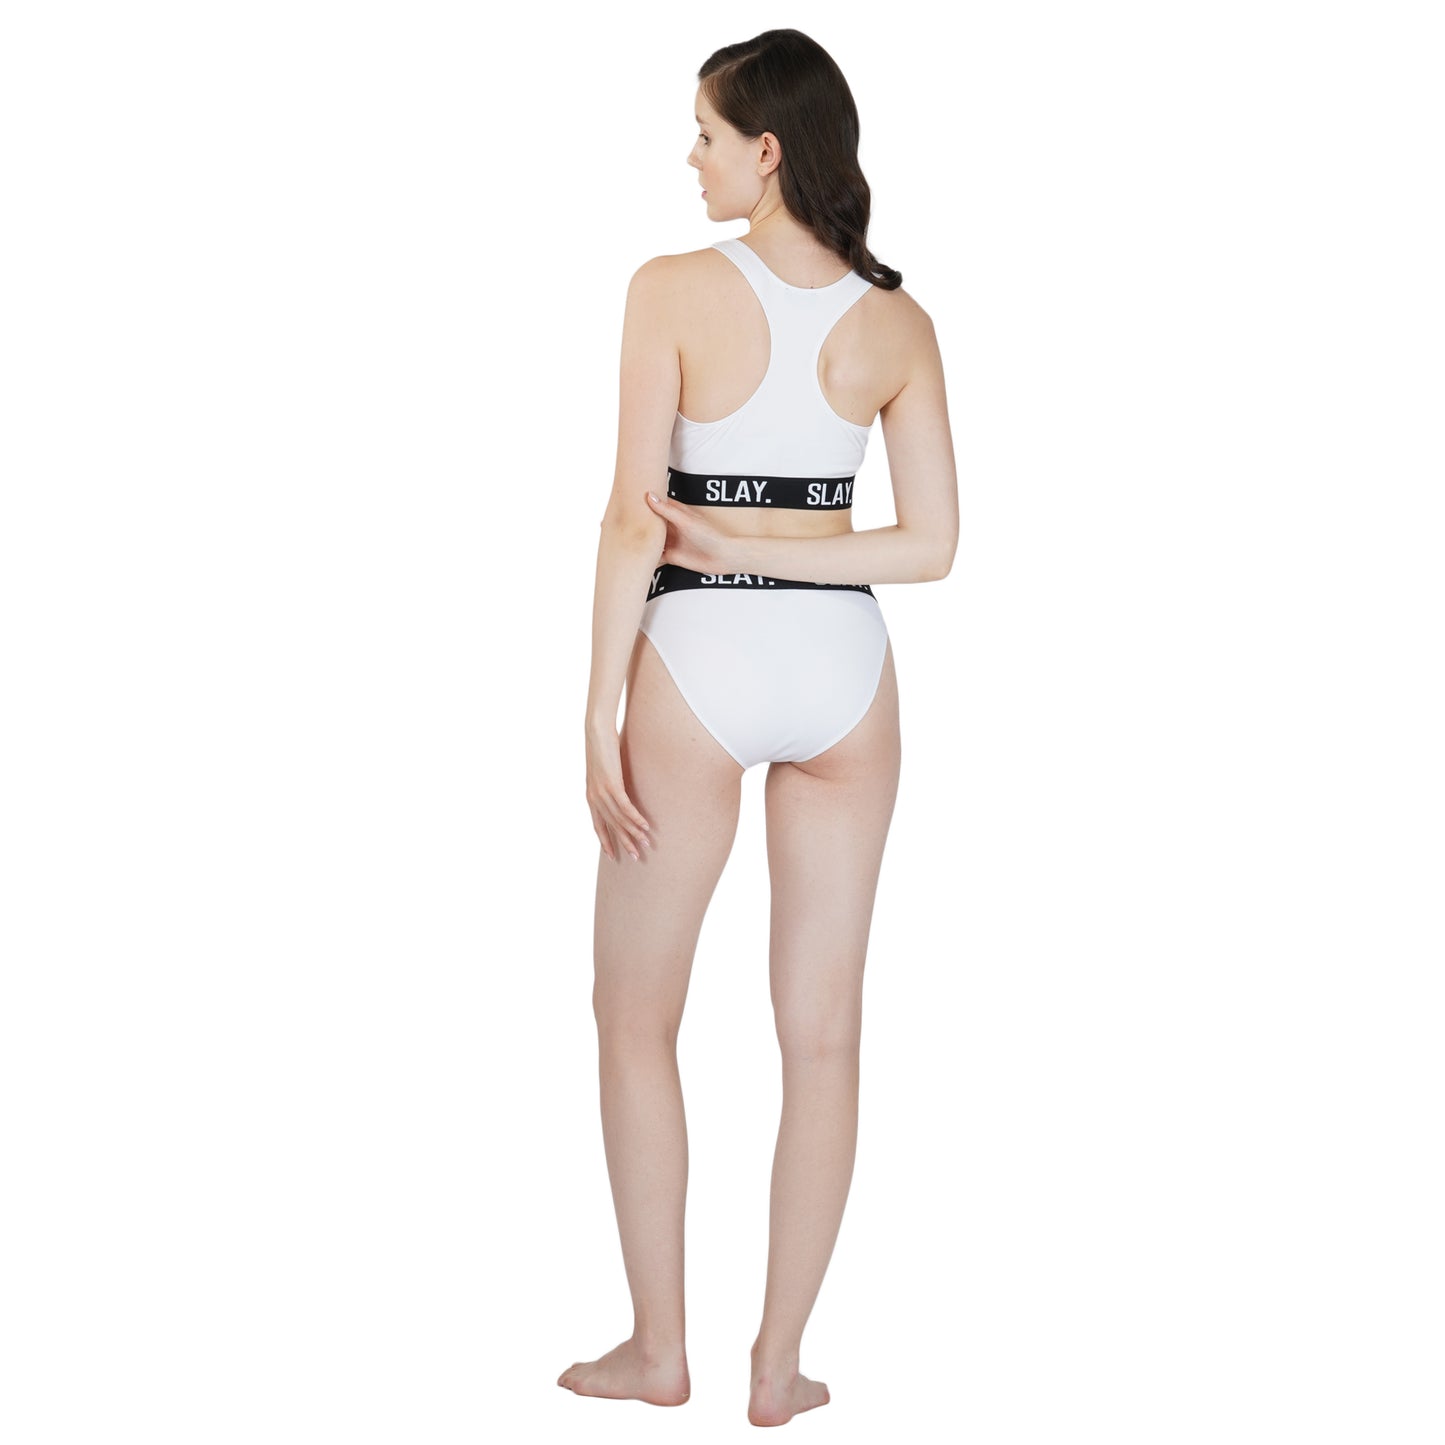 SLAY. Women's Underwear Lingerie Modern Sports Bra and Panty Set White